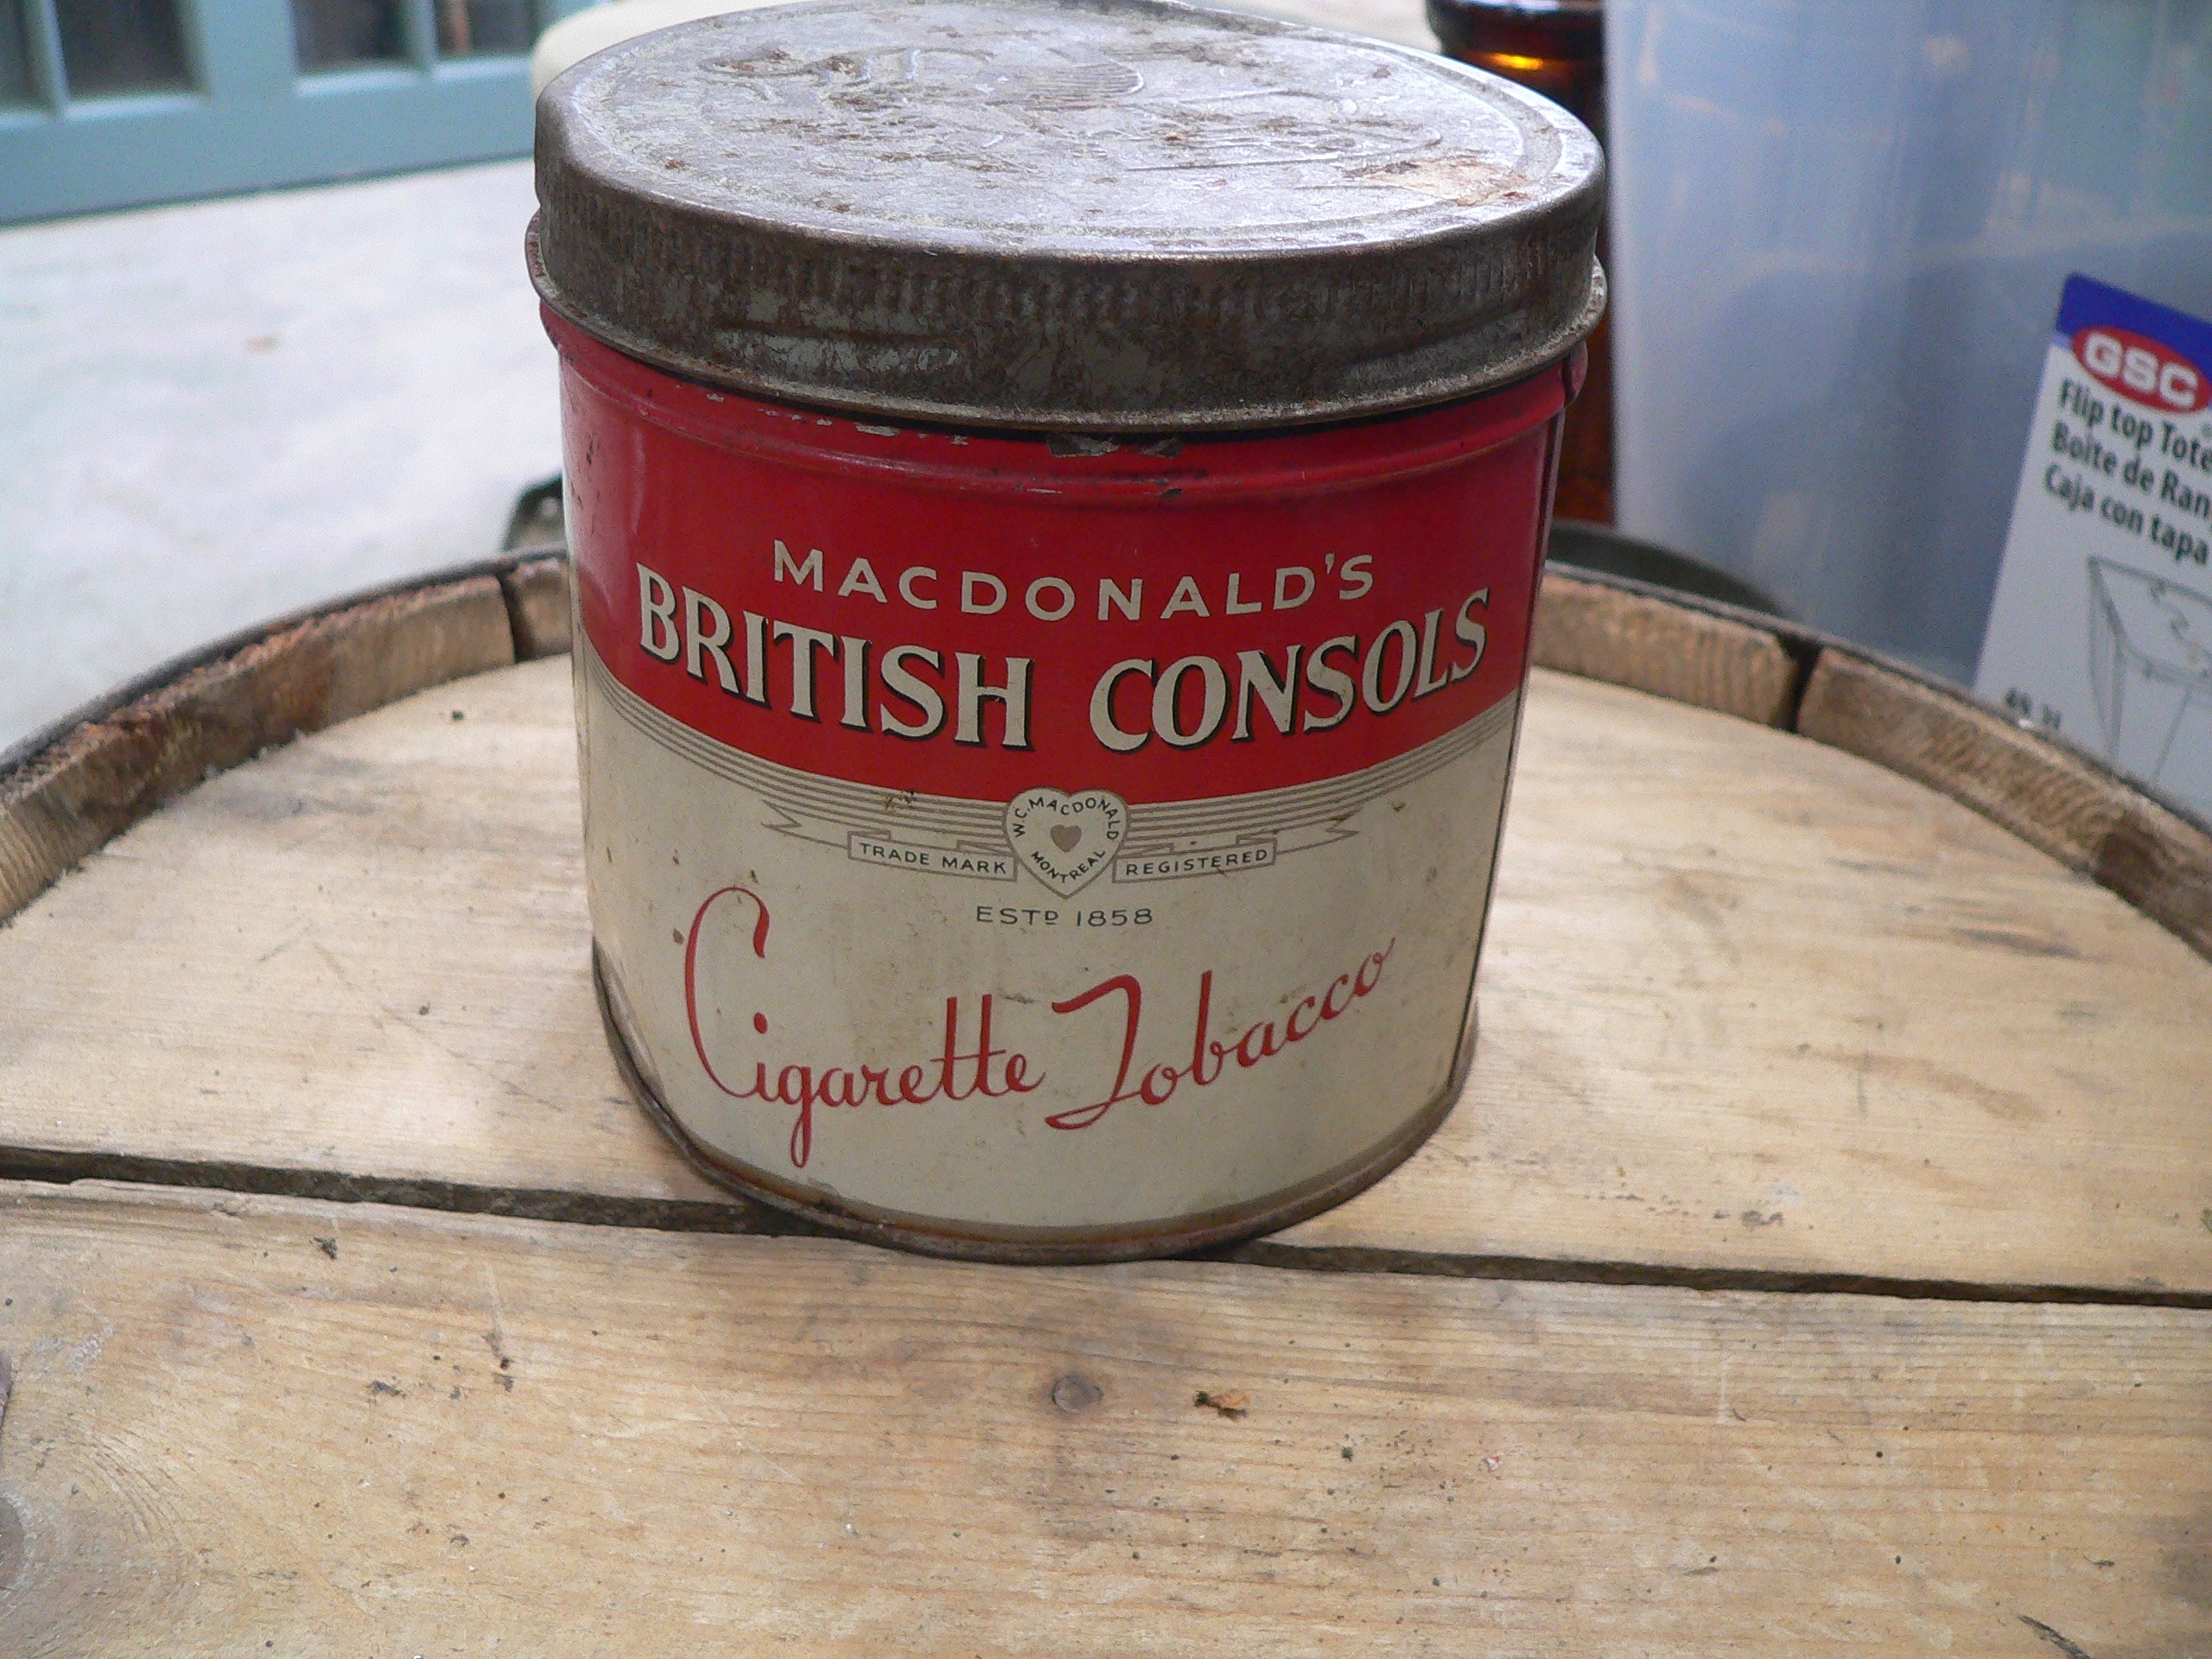 Canne de tabac british consols # 6919.8 